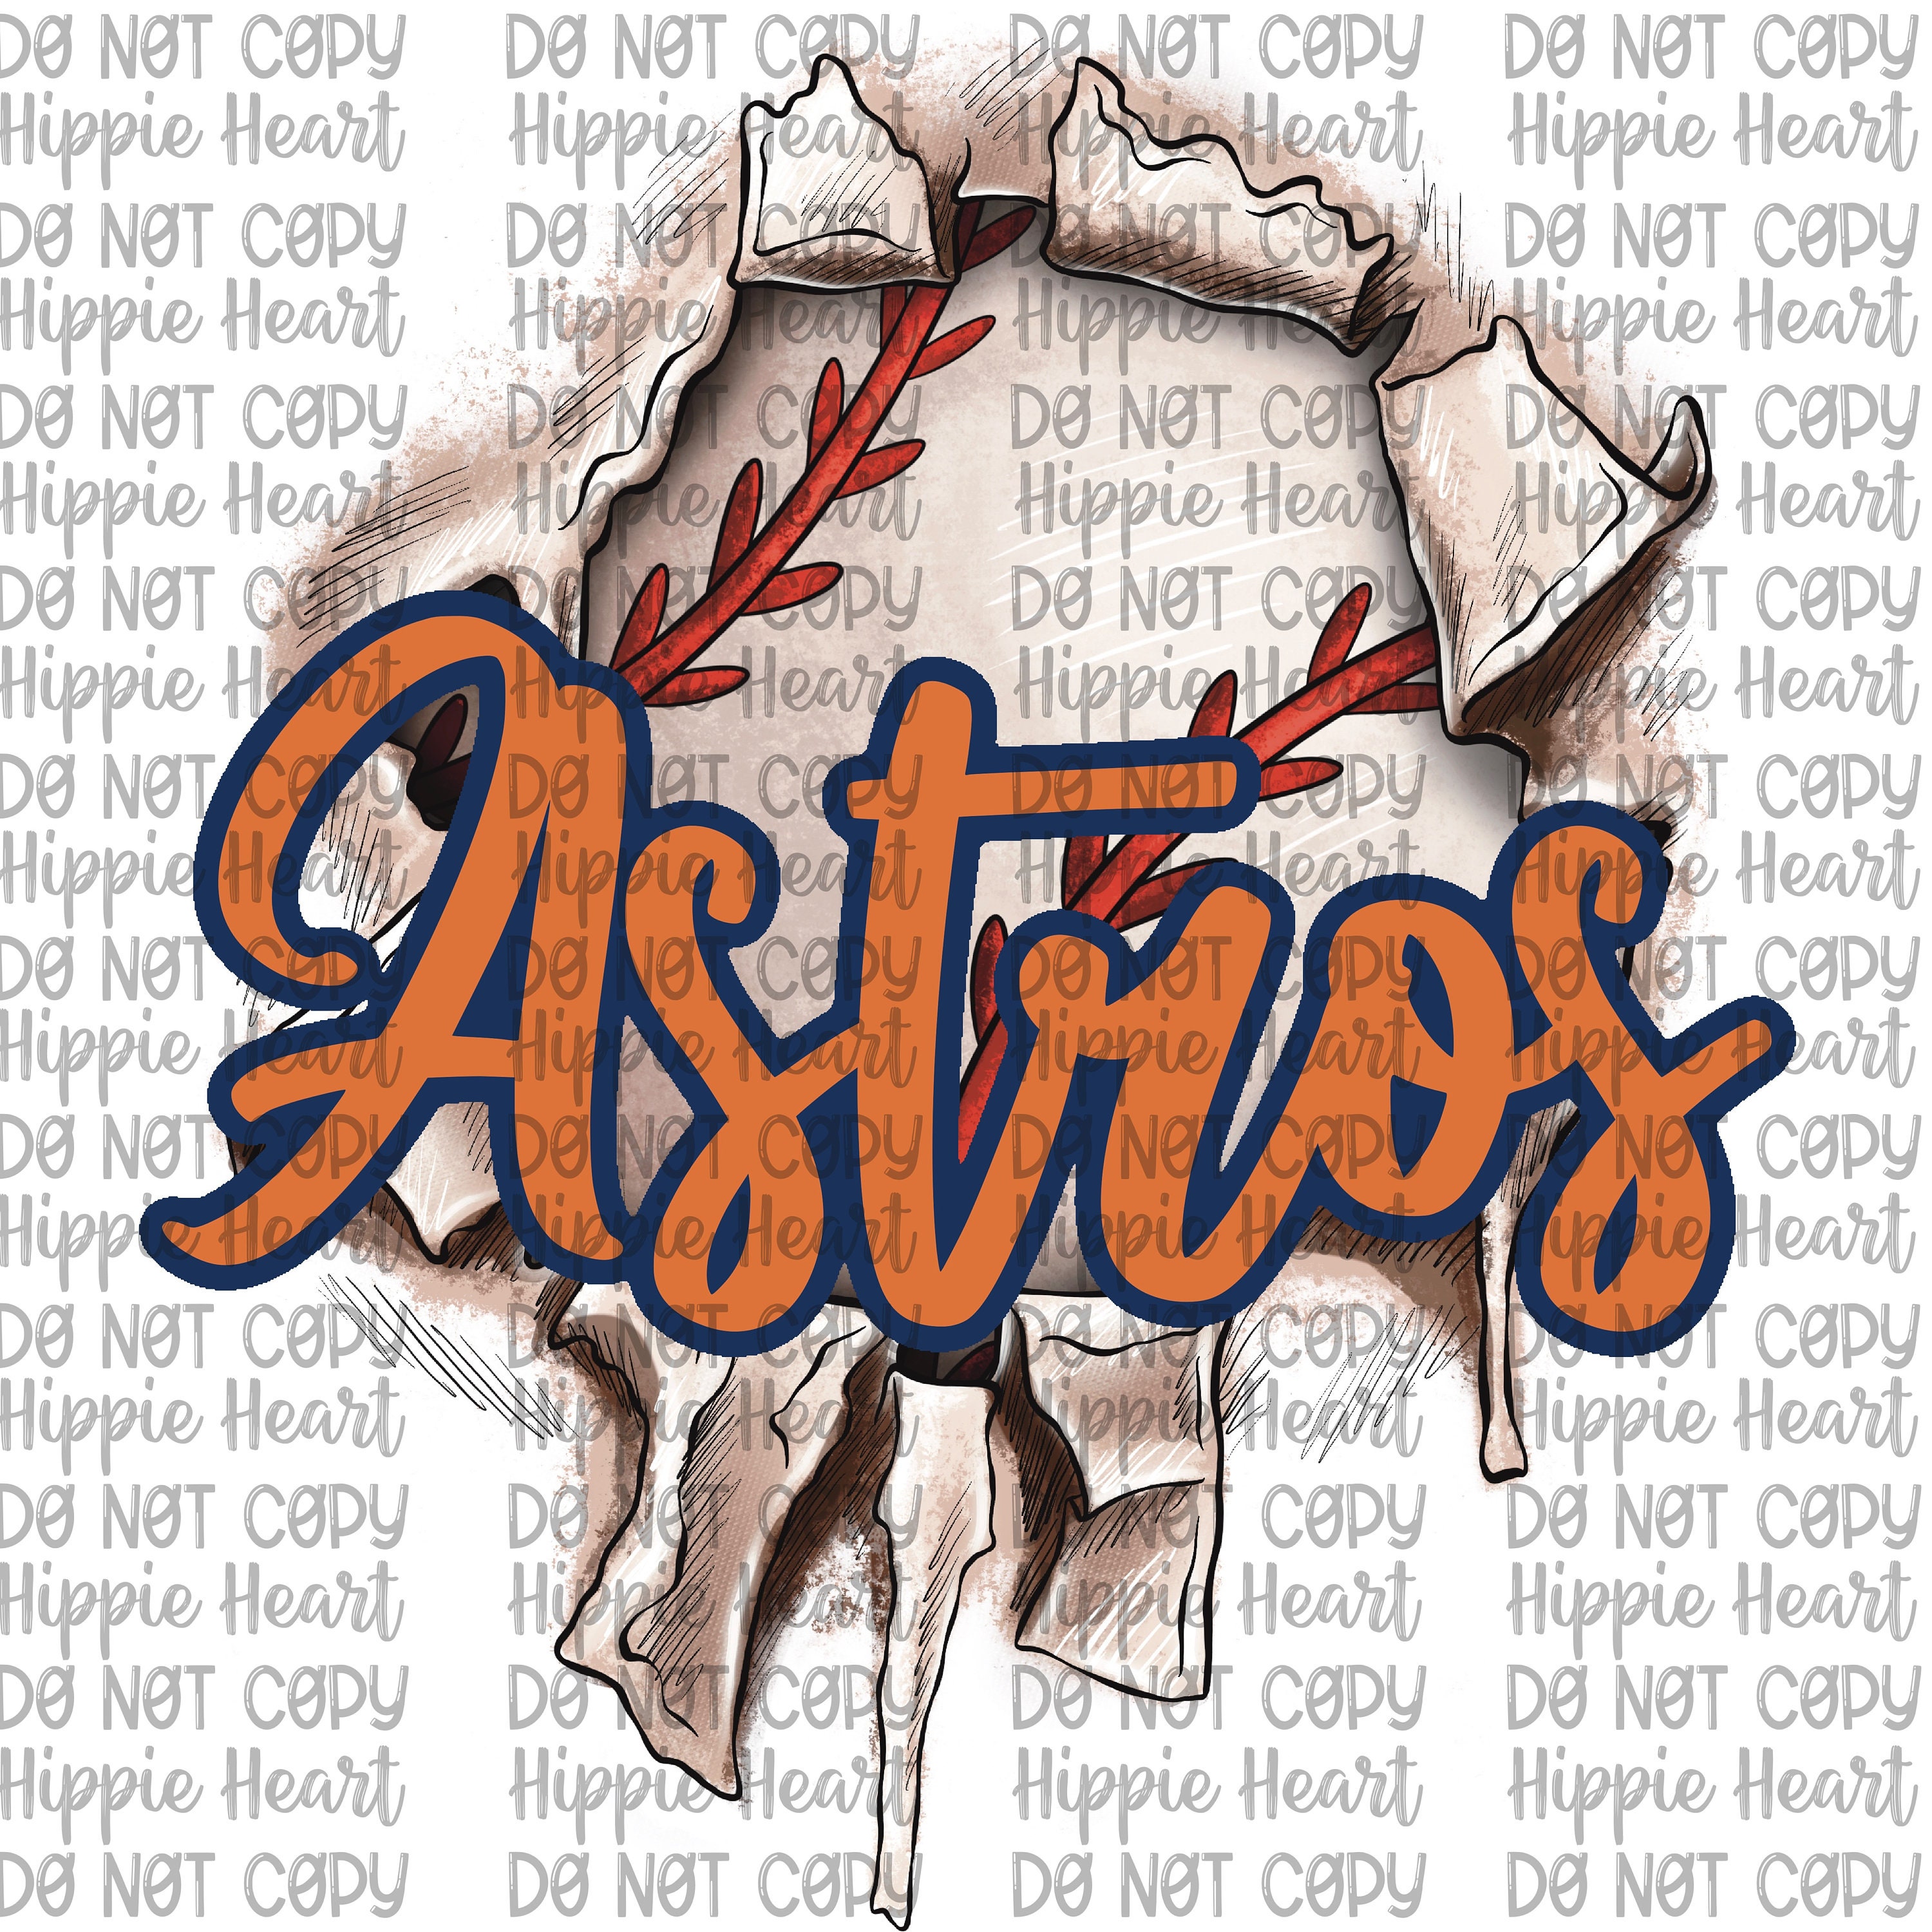 Go Astros Svg Cute Ghost Texas Svg Astro Baseball Halloween Svg